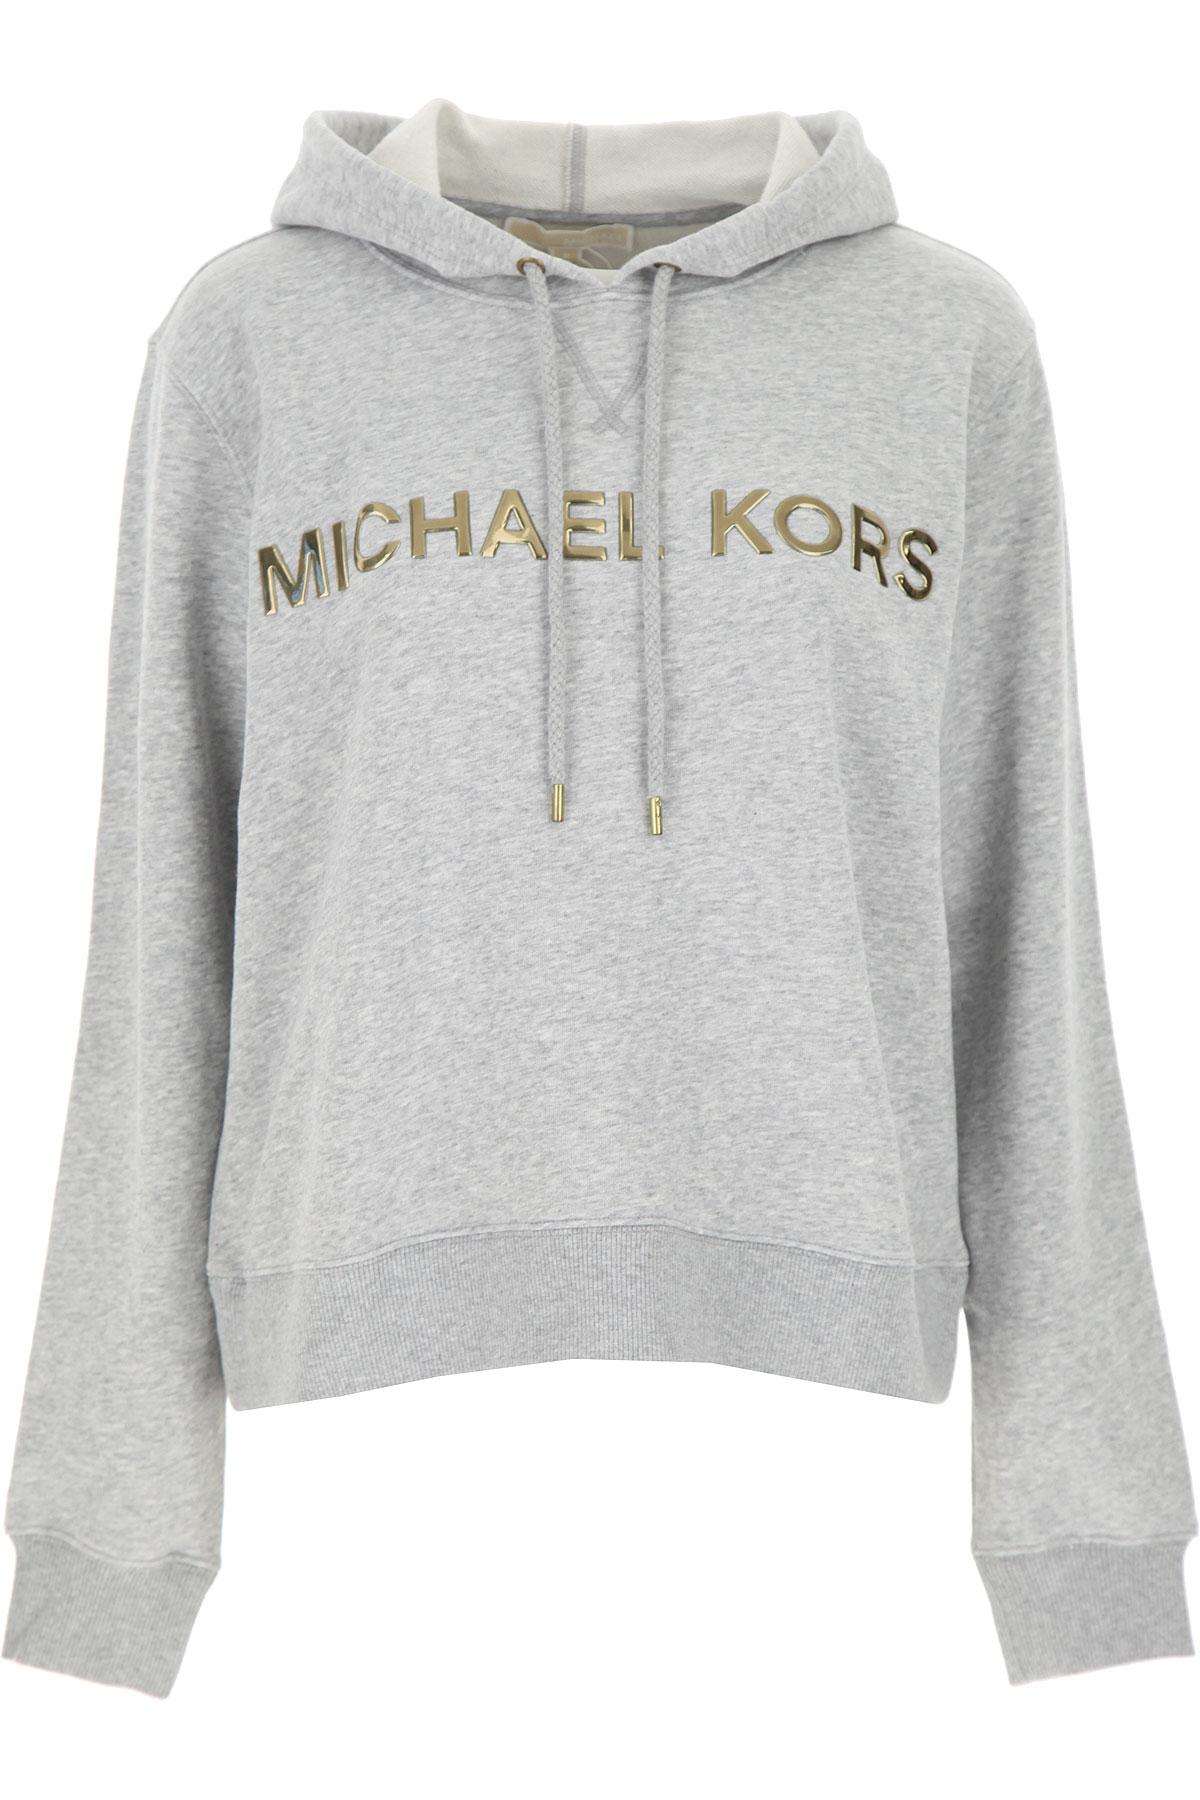 Michael Kors Cotton Relief Logo Hoodie in Grey (Gray) - Lyst